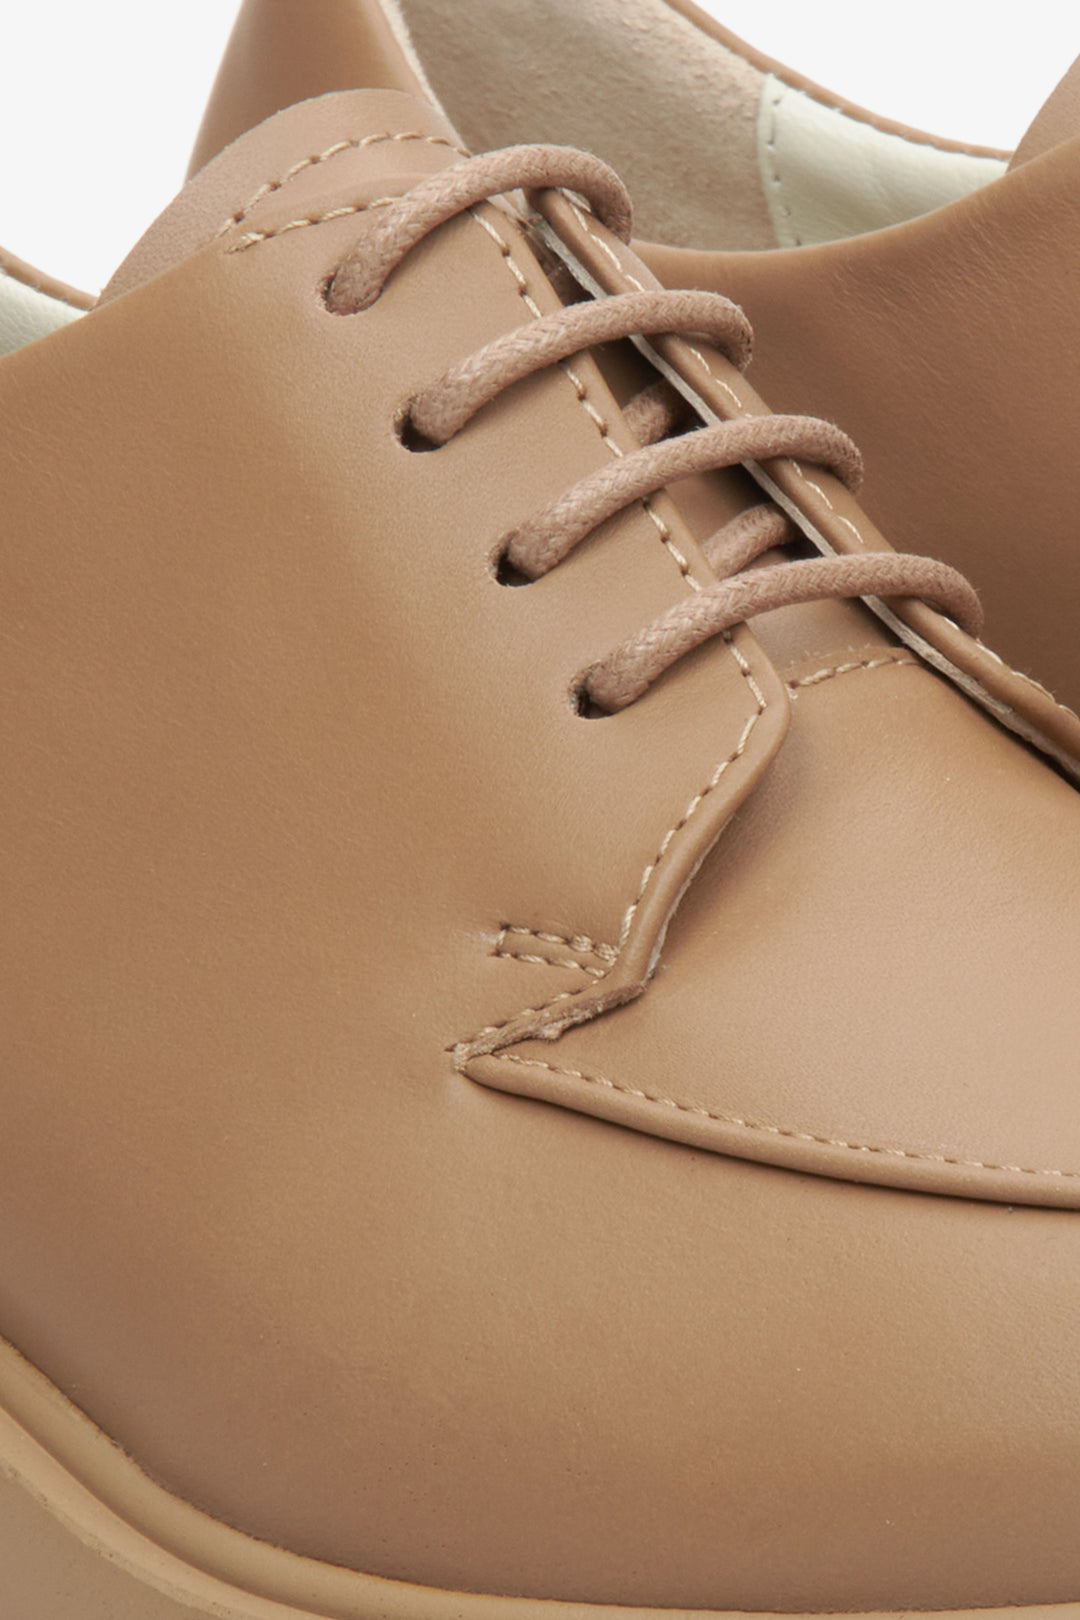 Women's brown platform lace-up shoes by Estro - close-up on the details.